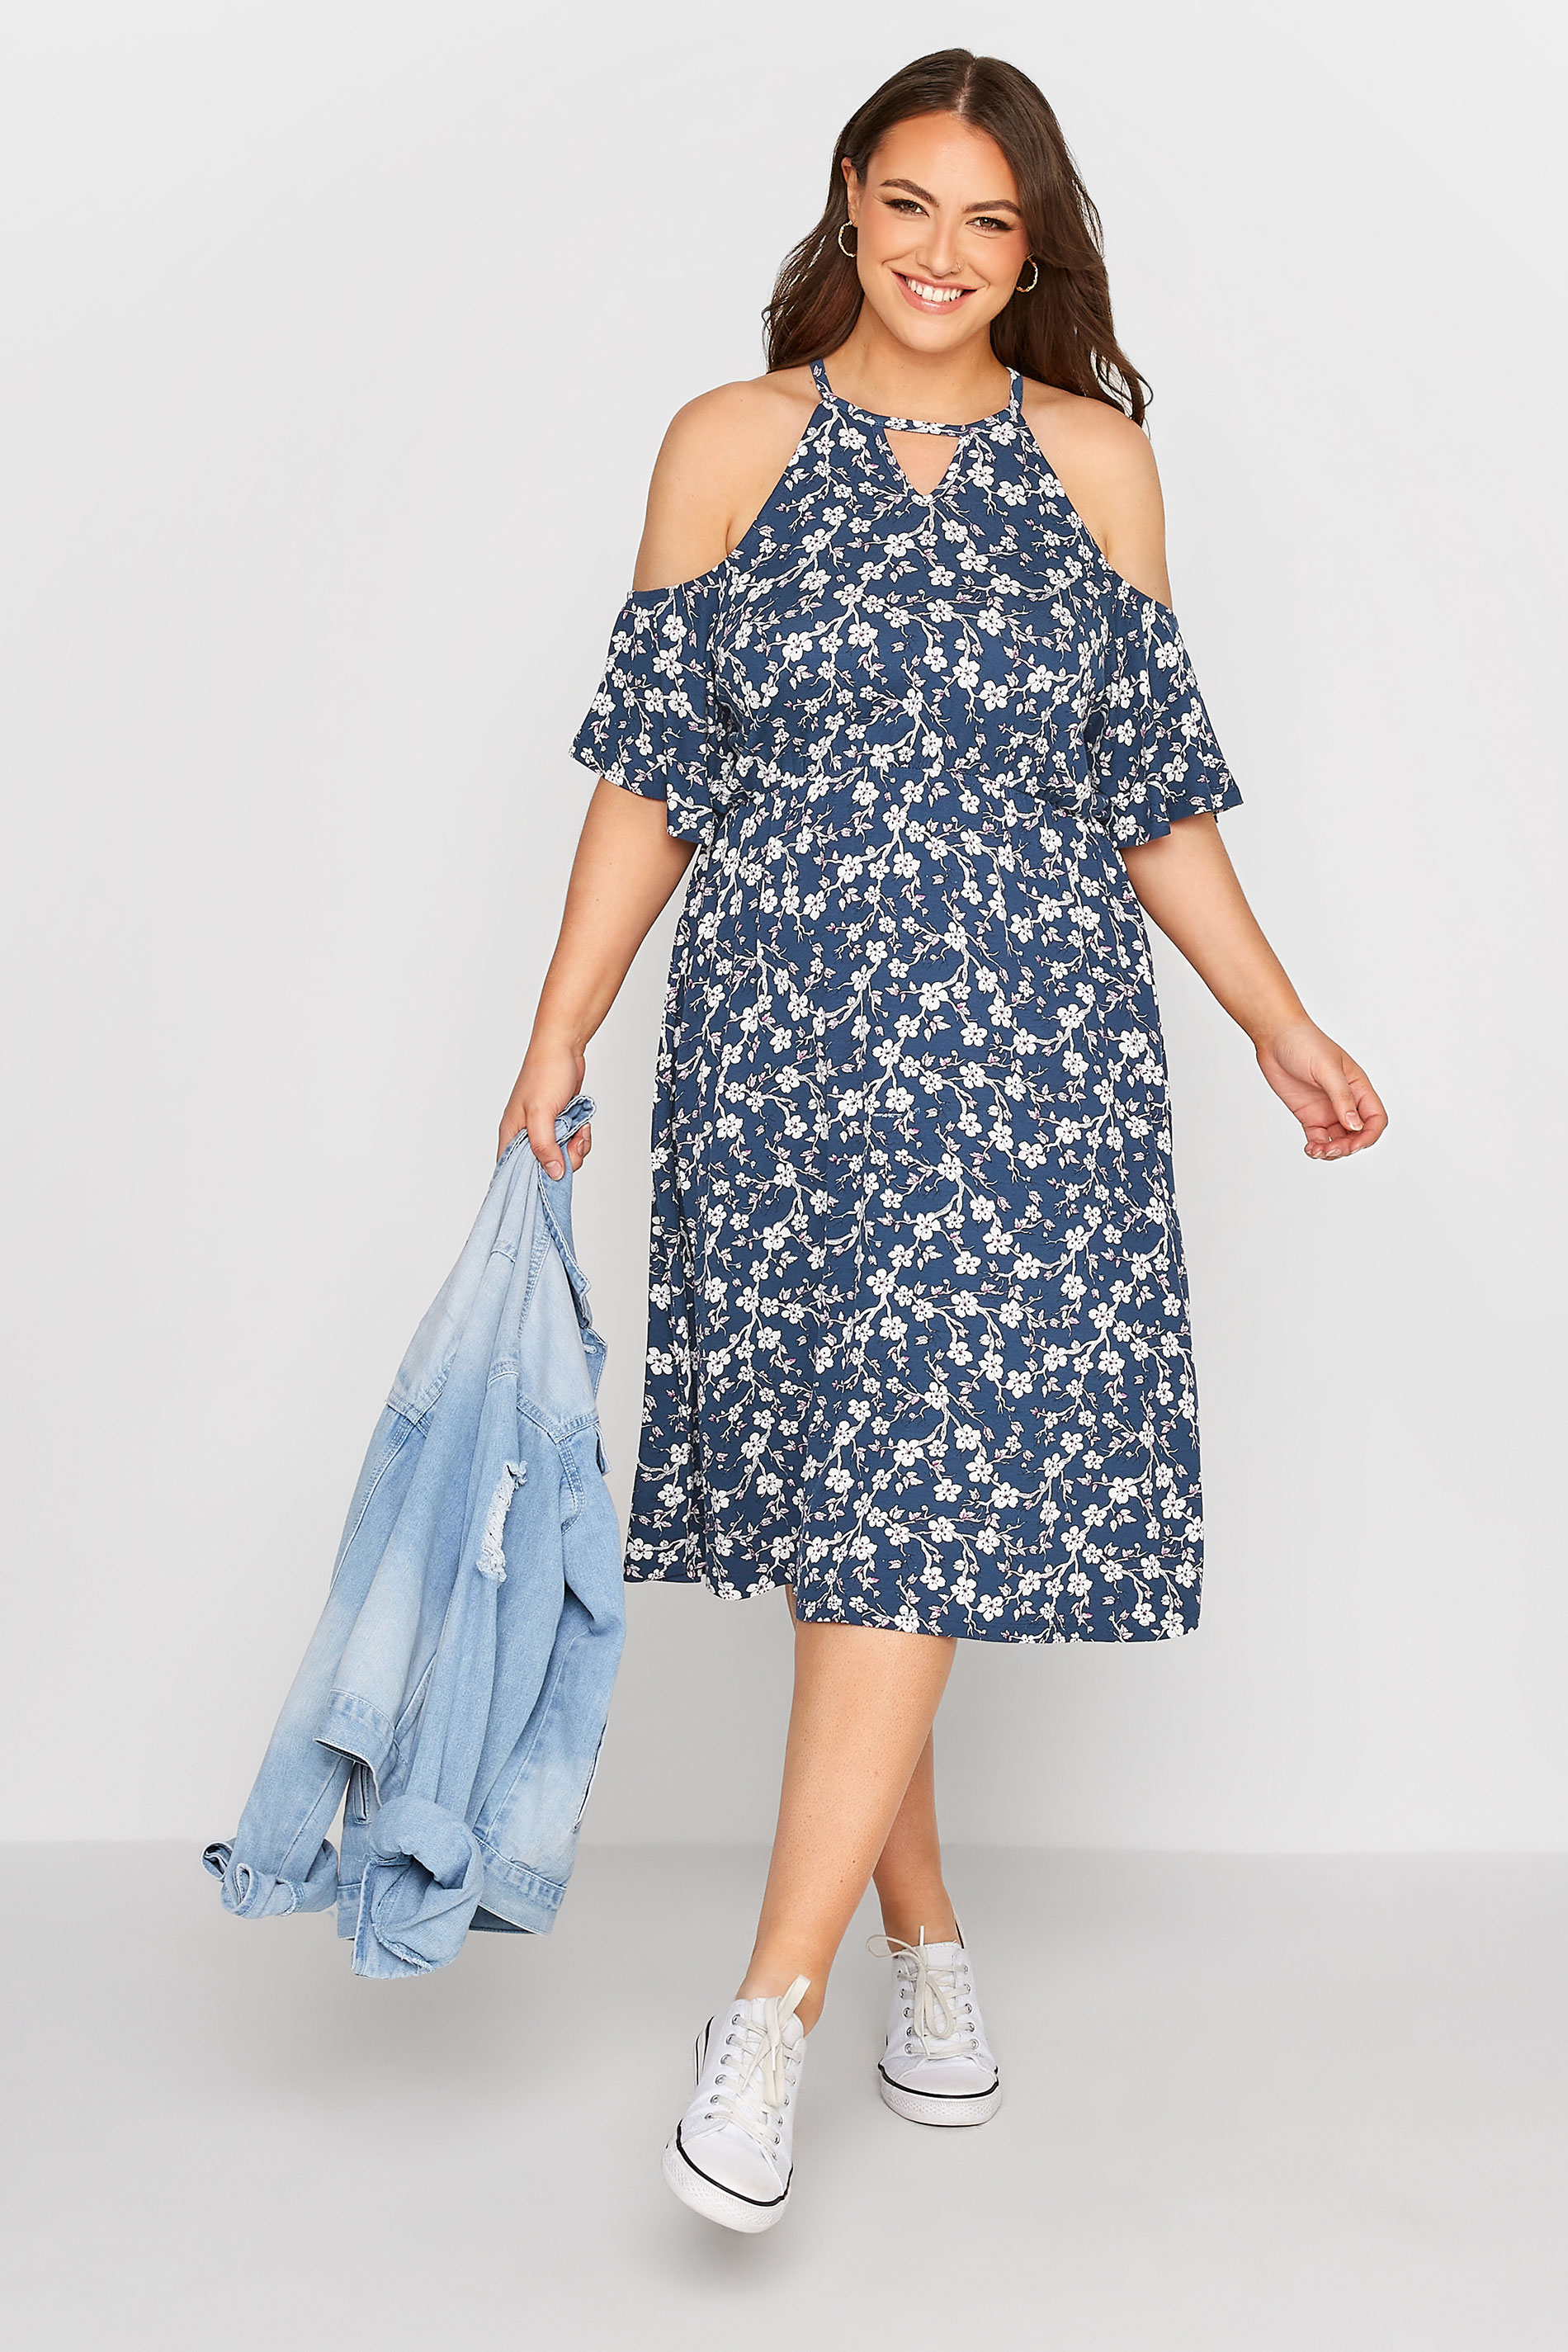 Plus Size Blue Floral Cold Shoulder Dress | Yours Clothing 1